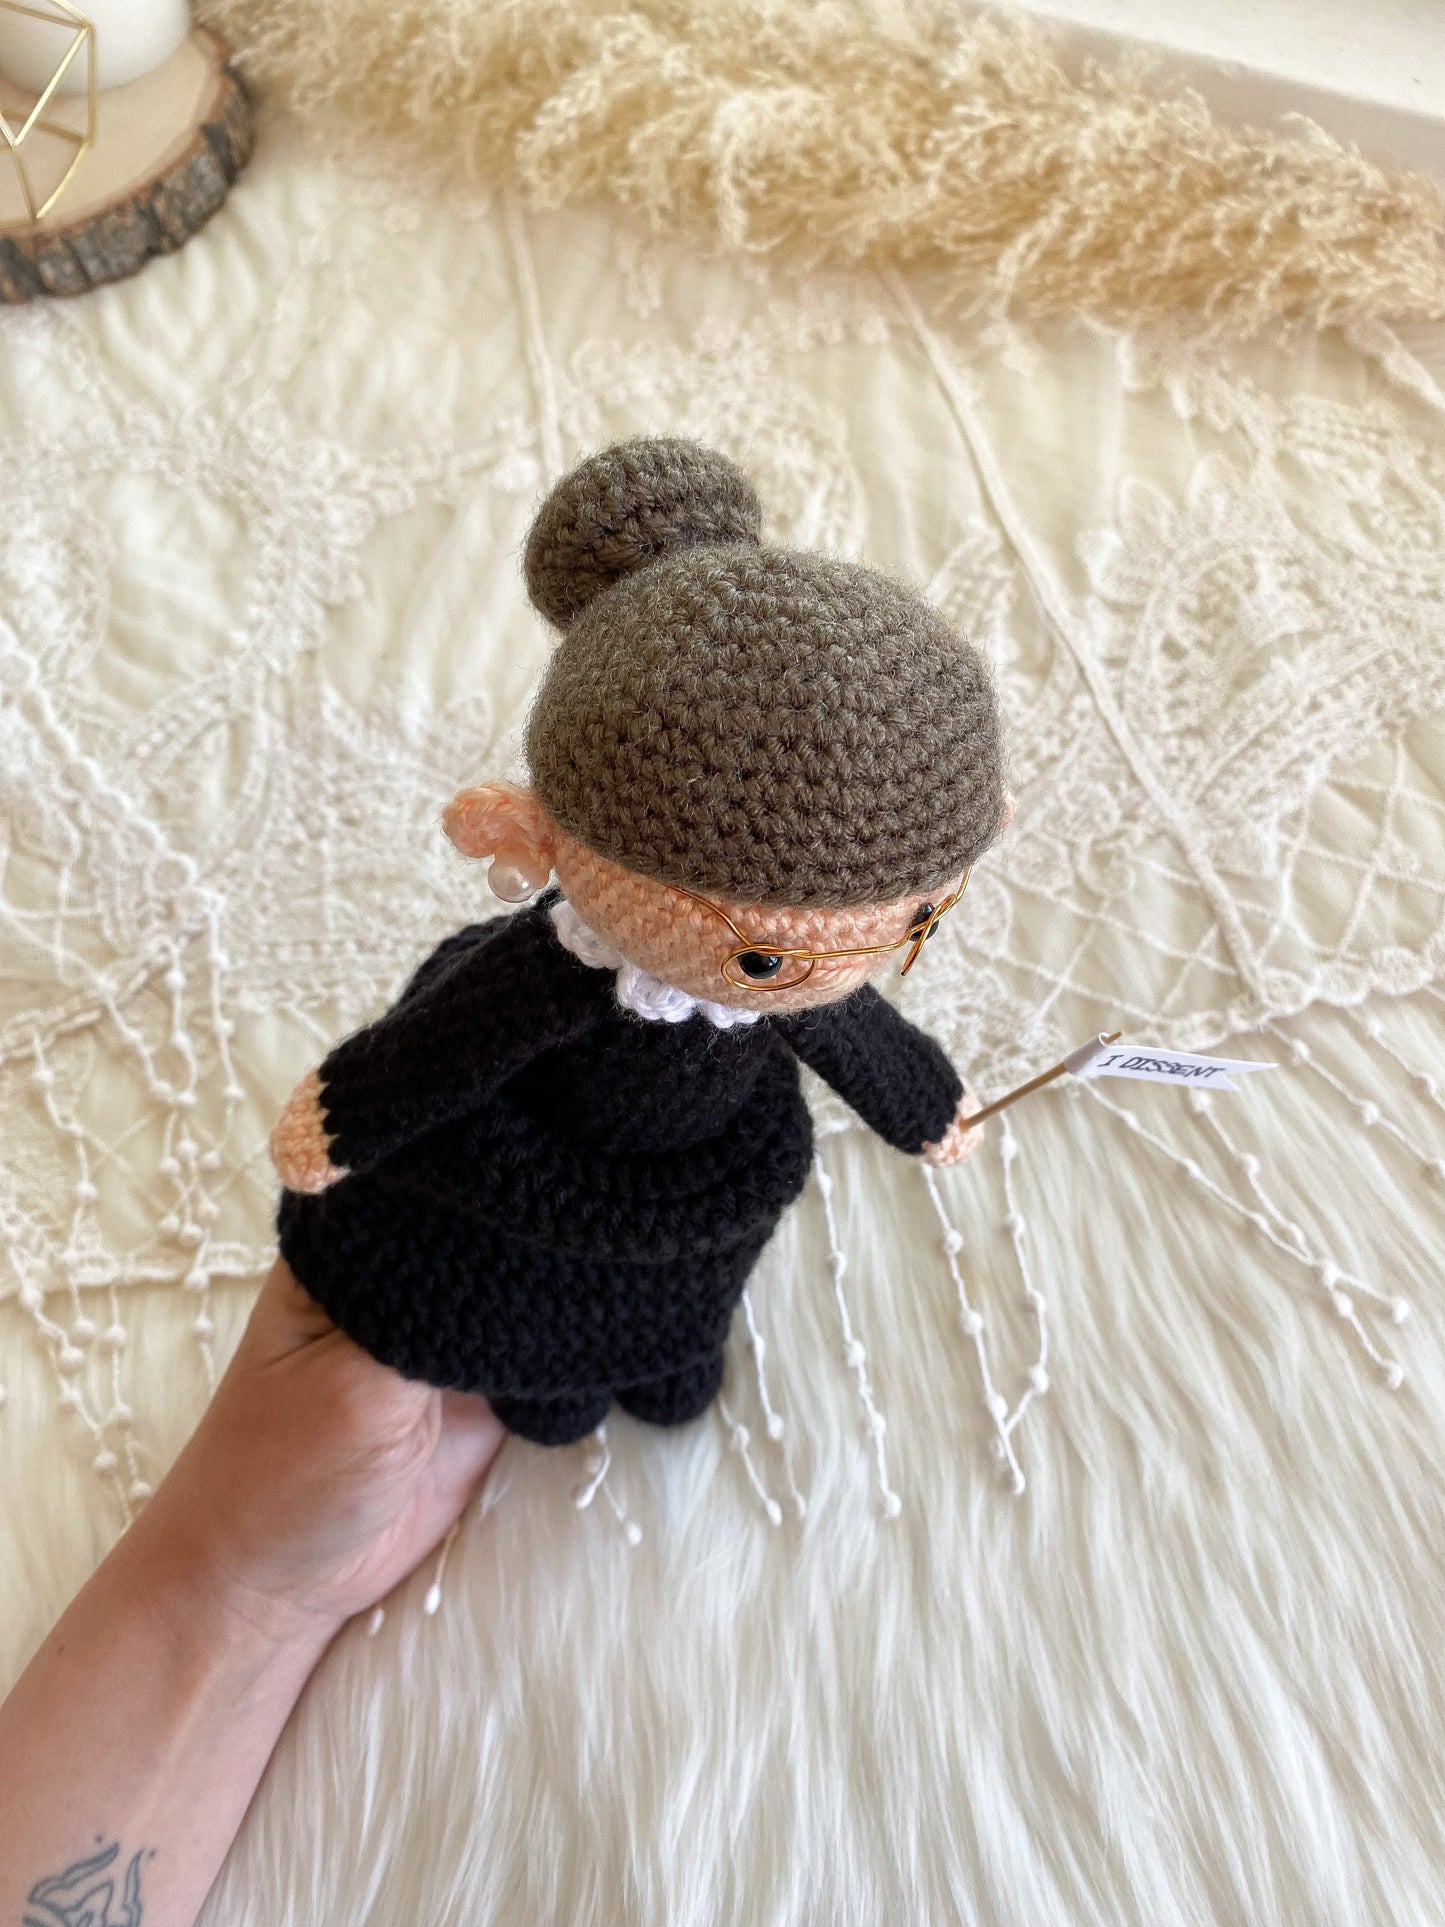 Ruth Bader Ginsburg “I dissent” crocheted doll (custom order)